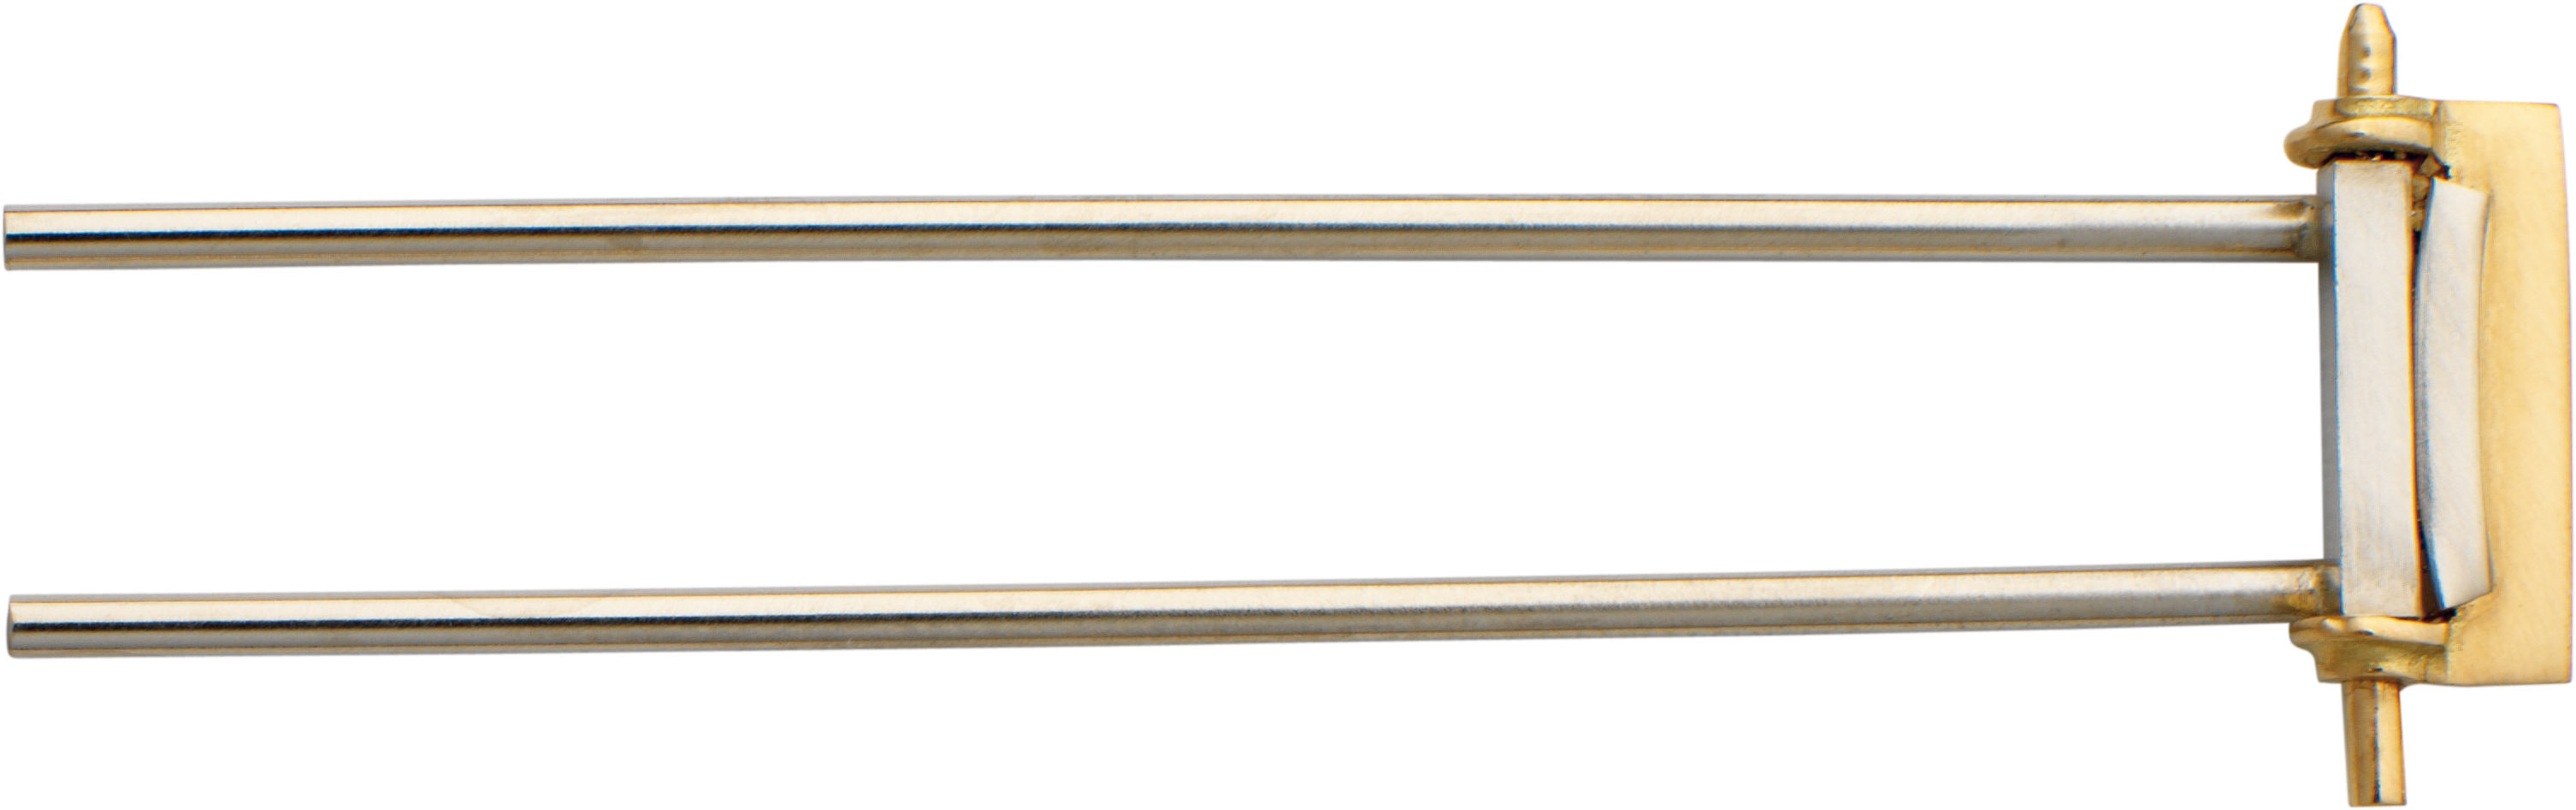 Doppelnadel Gold 750/-Gg/-Wg bicolor, L 40,00 x B 10,00mm